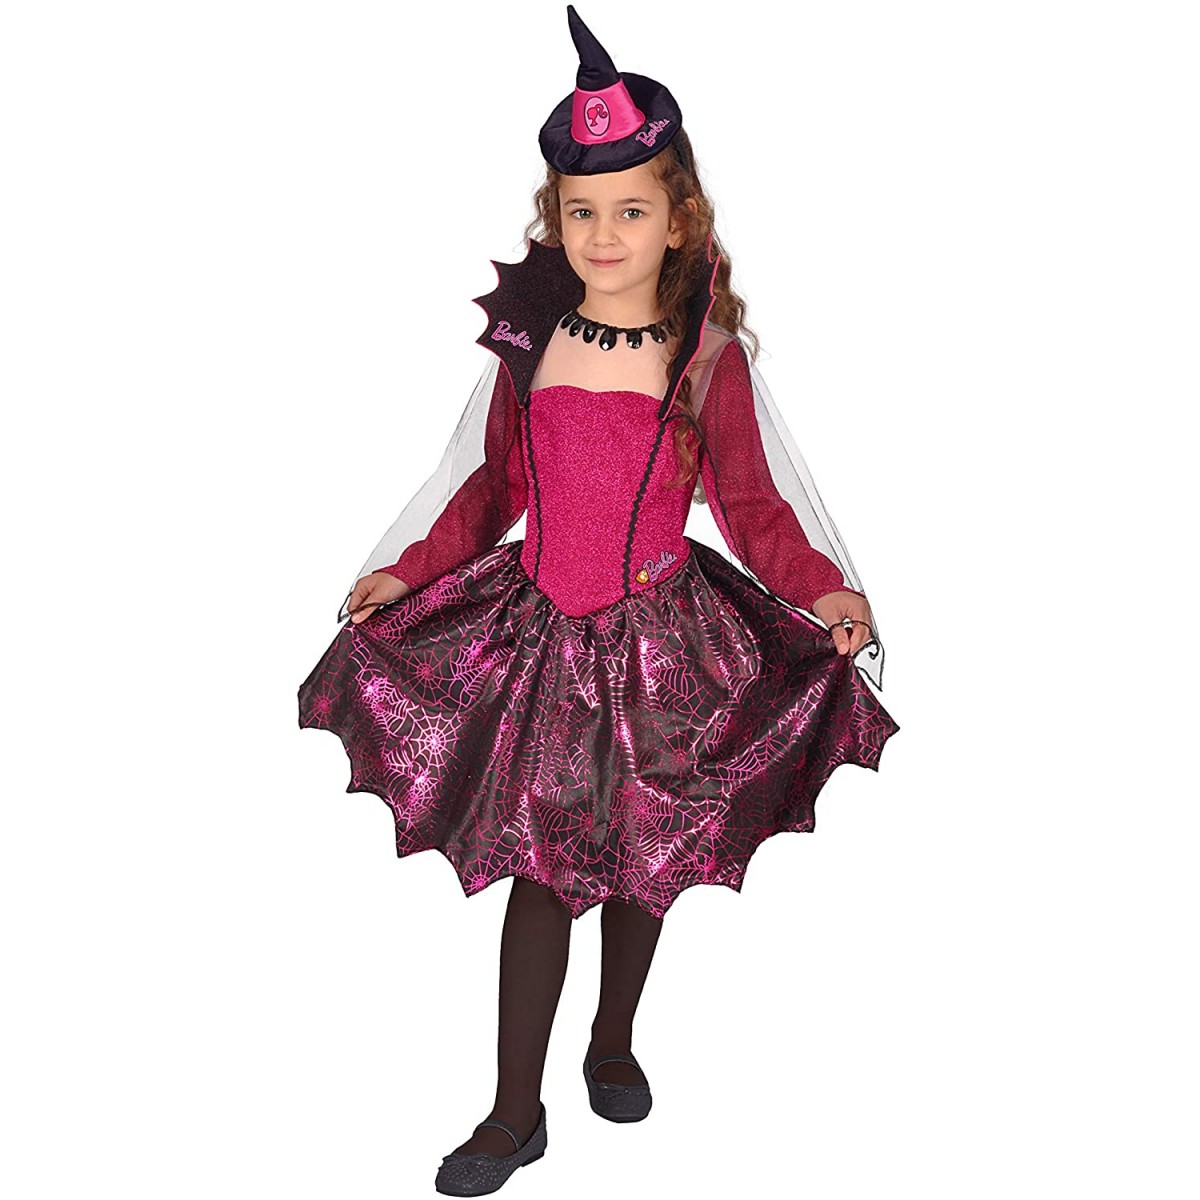 Costume da Strega Fashion per bambine, Barbie Original